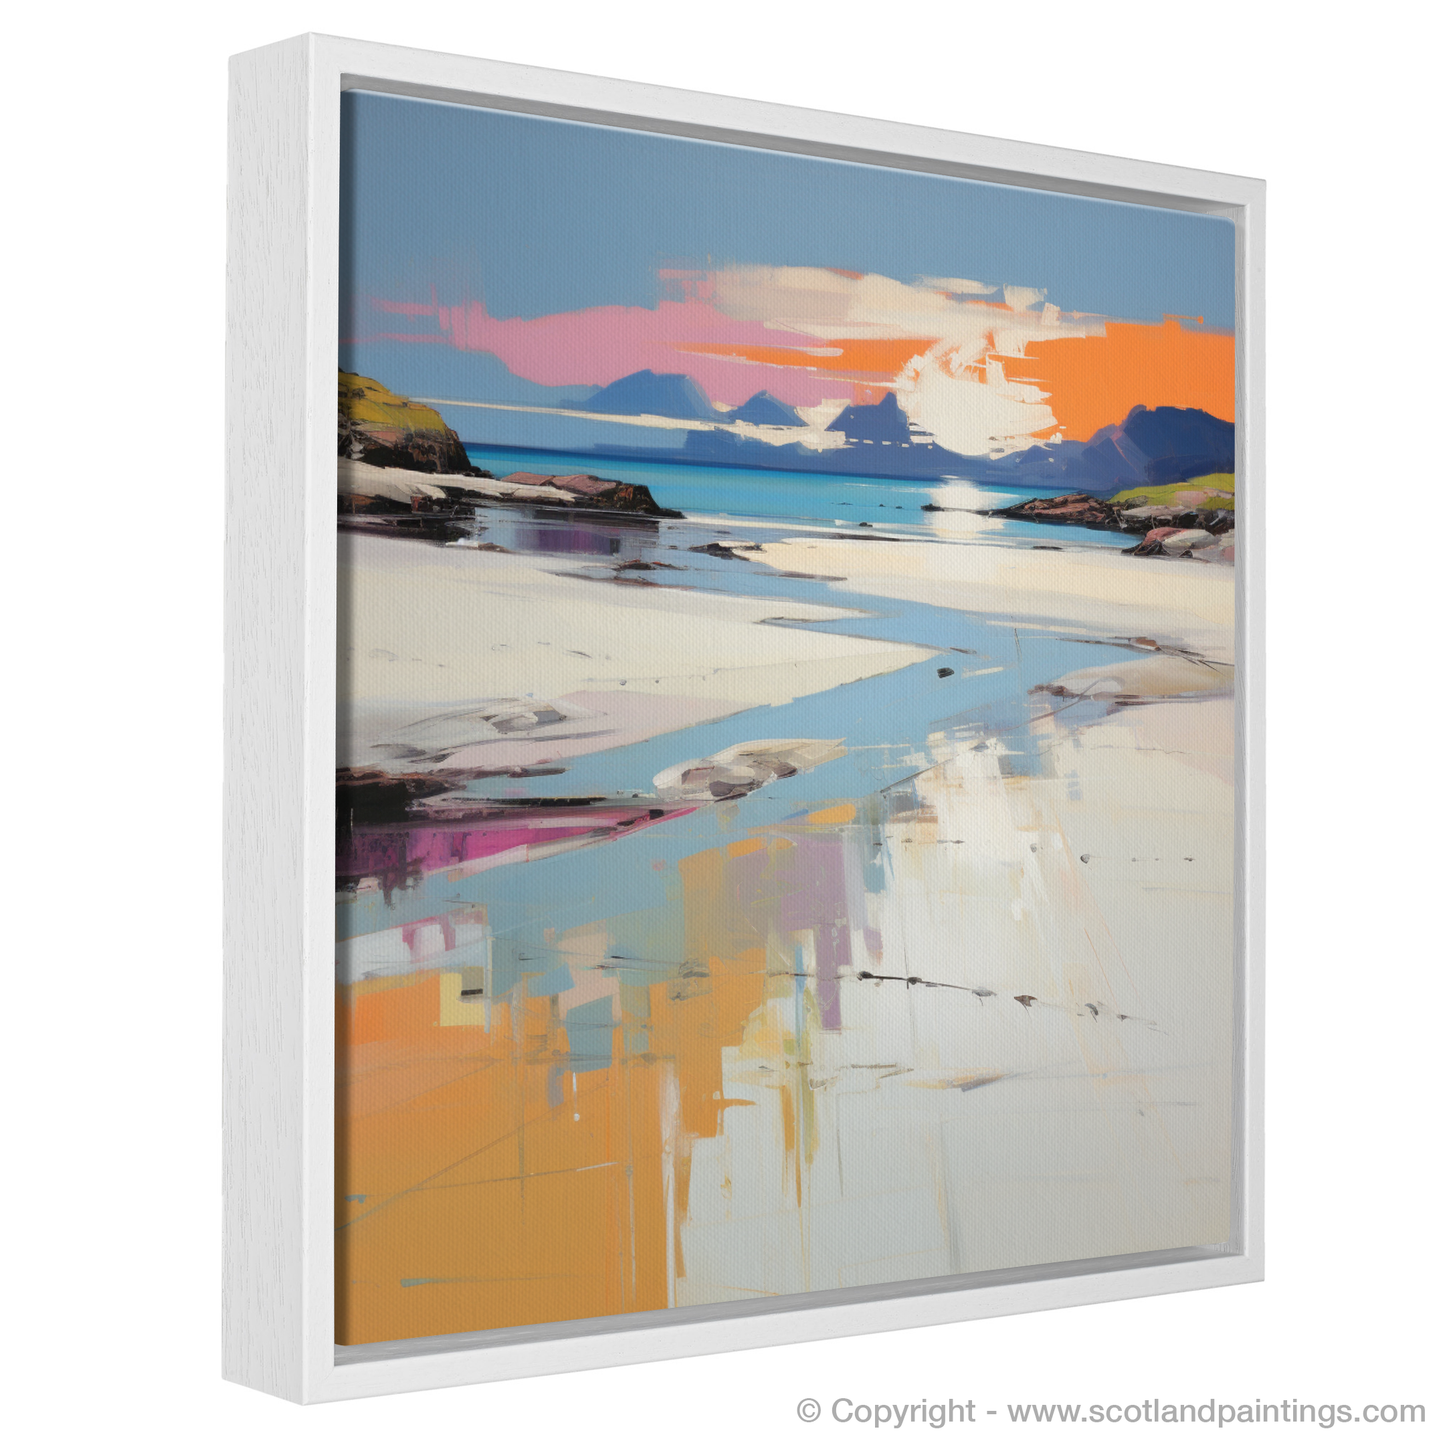 Painting and Art Print of Camusdarach Beach, Arisaig entitled "Camusdarach Beach Serenade: A Contemporary Homage to Scottish Shores".